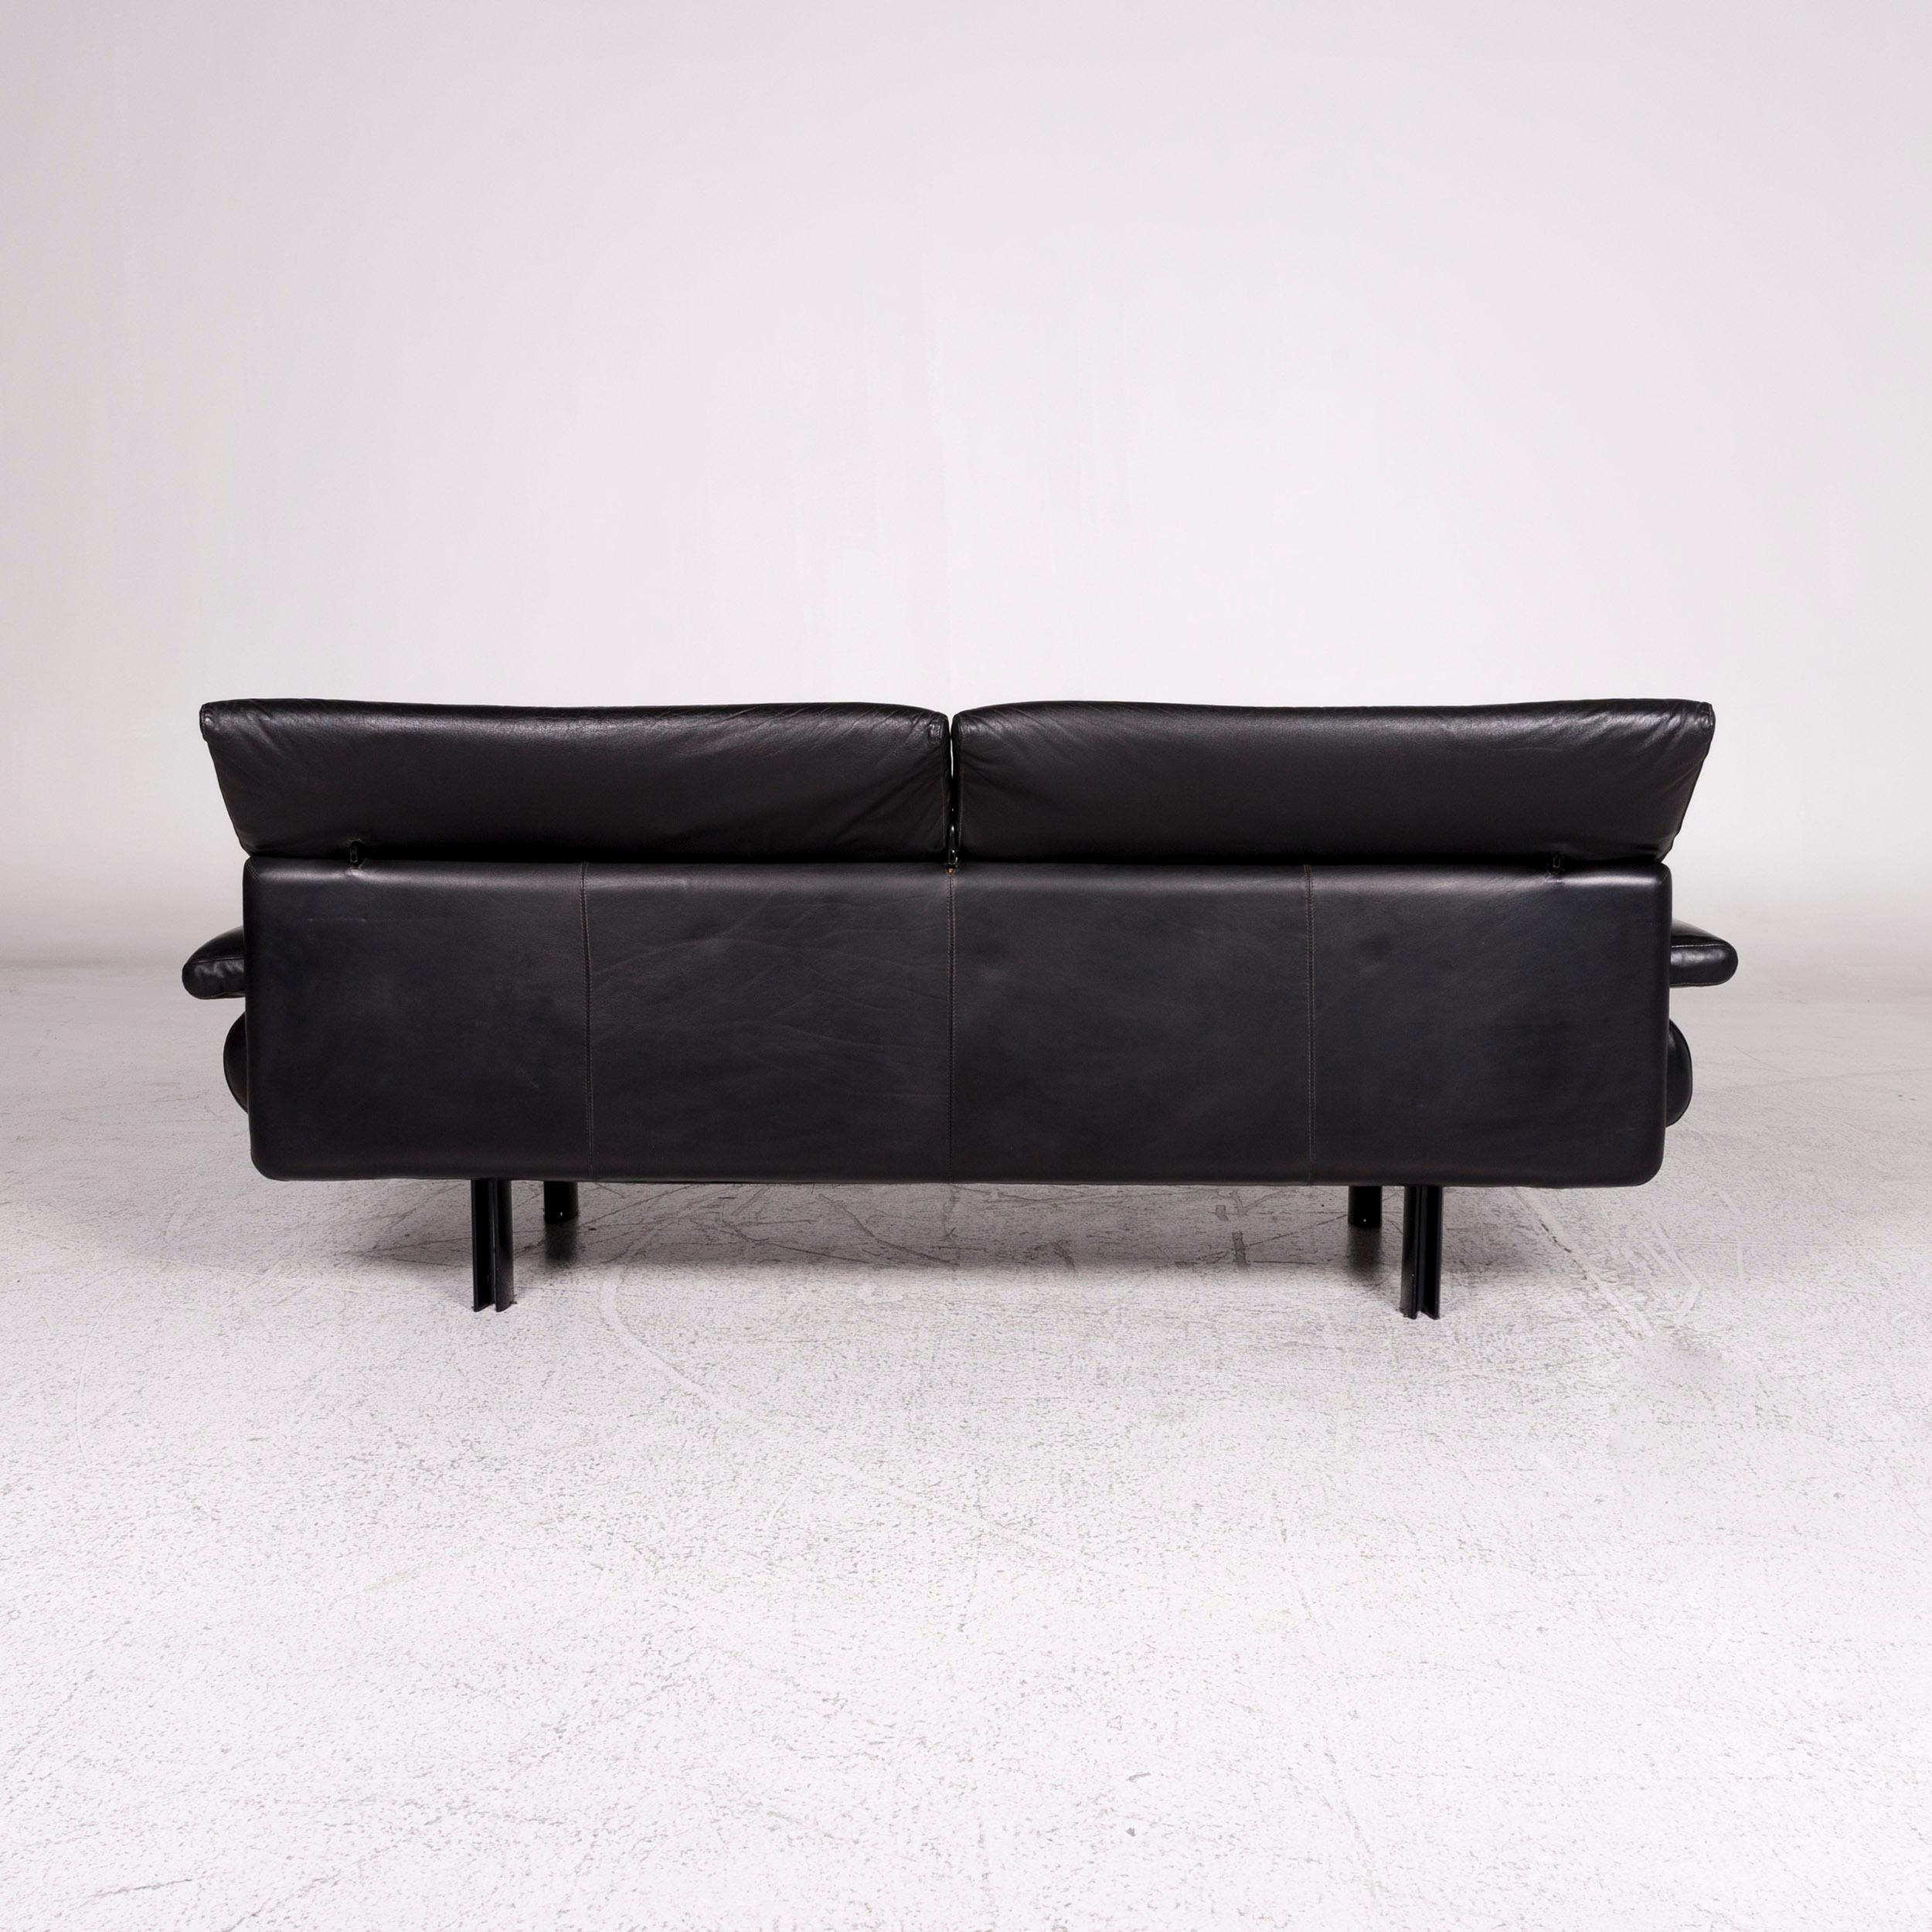 B & B Italia Alanda Leather Sofa Black Two-Seat Function Paolo Piva Couch 2